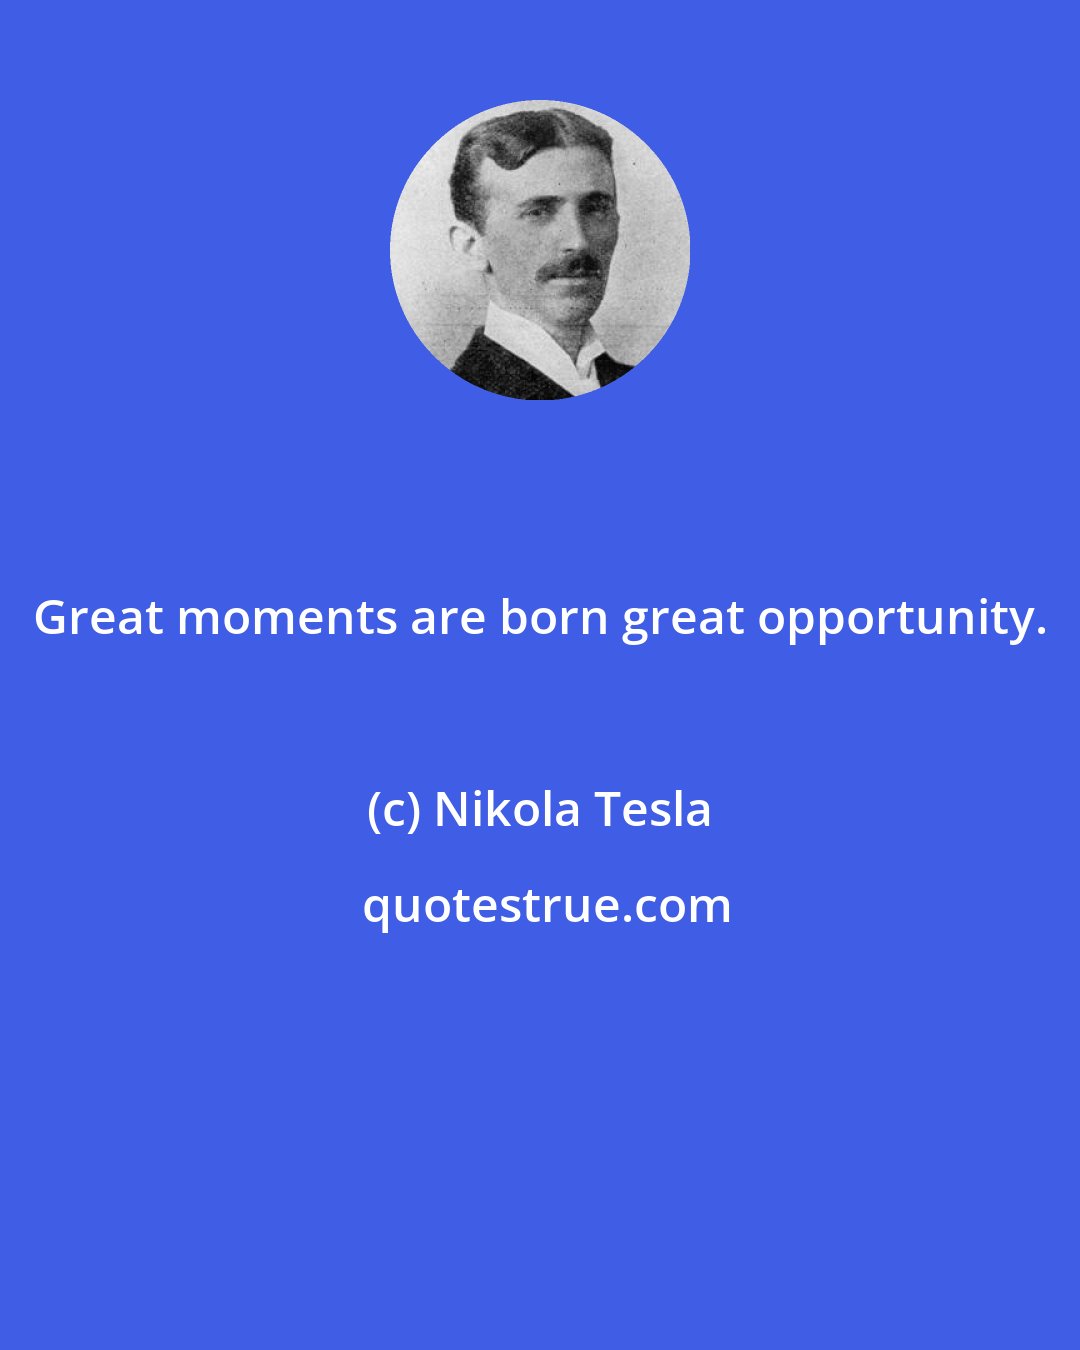 Nikola Tesla: Great moments are born great opportunity.